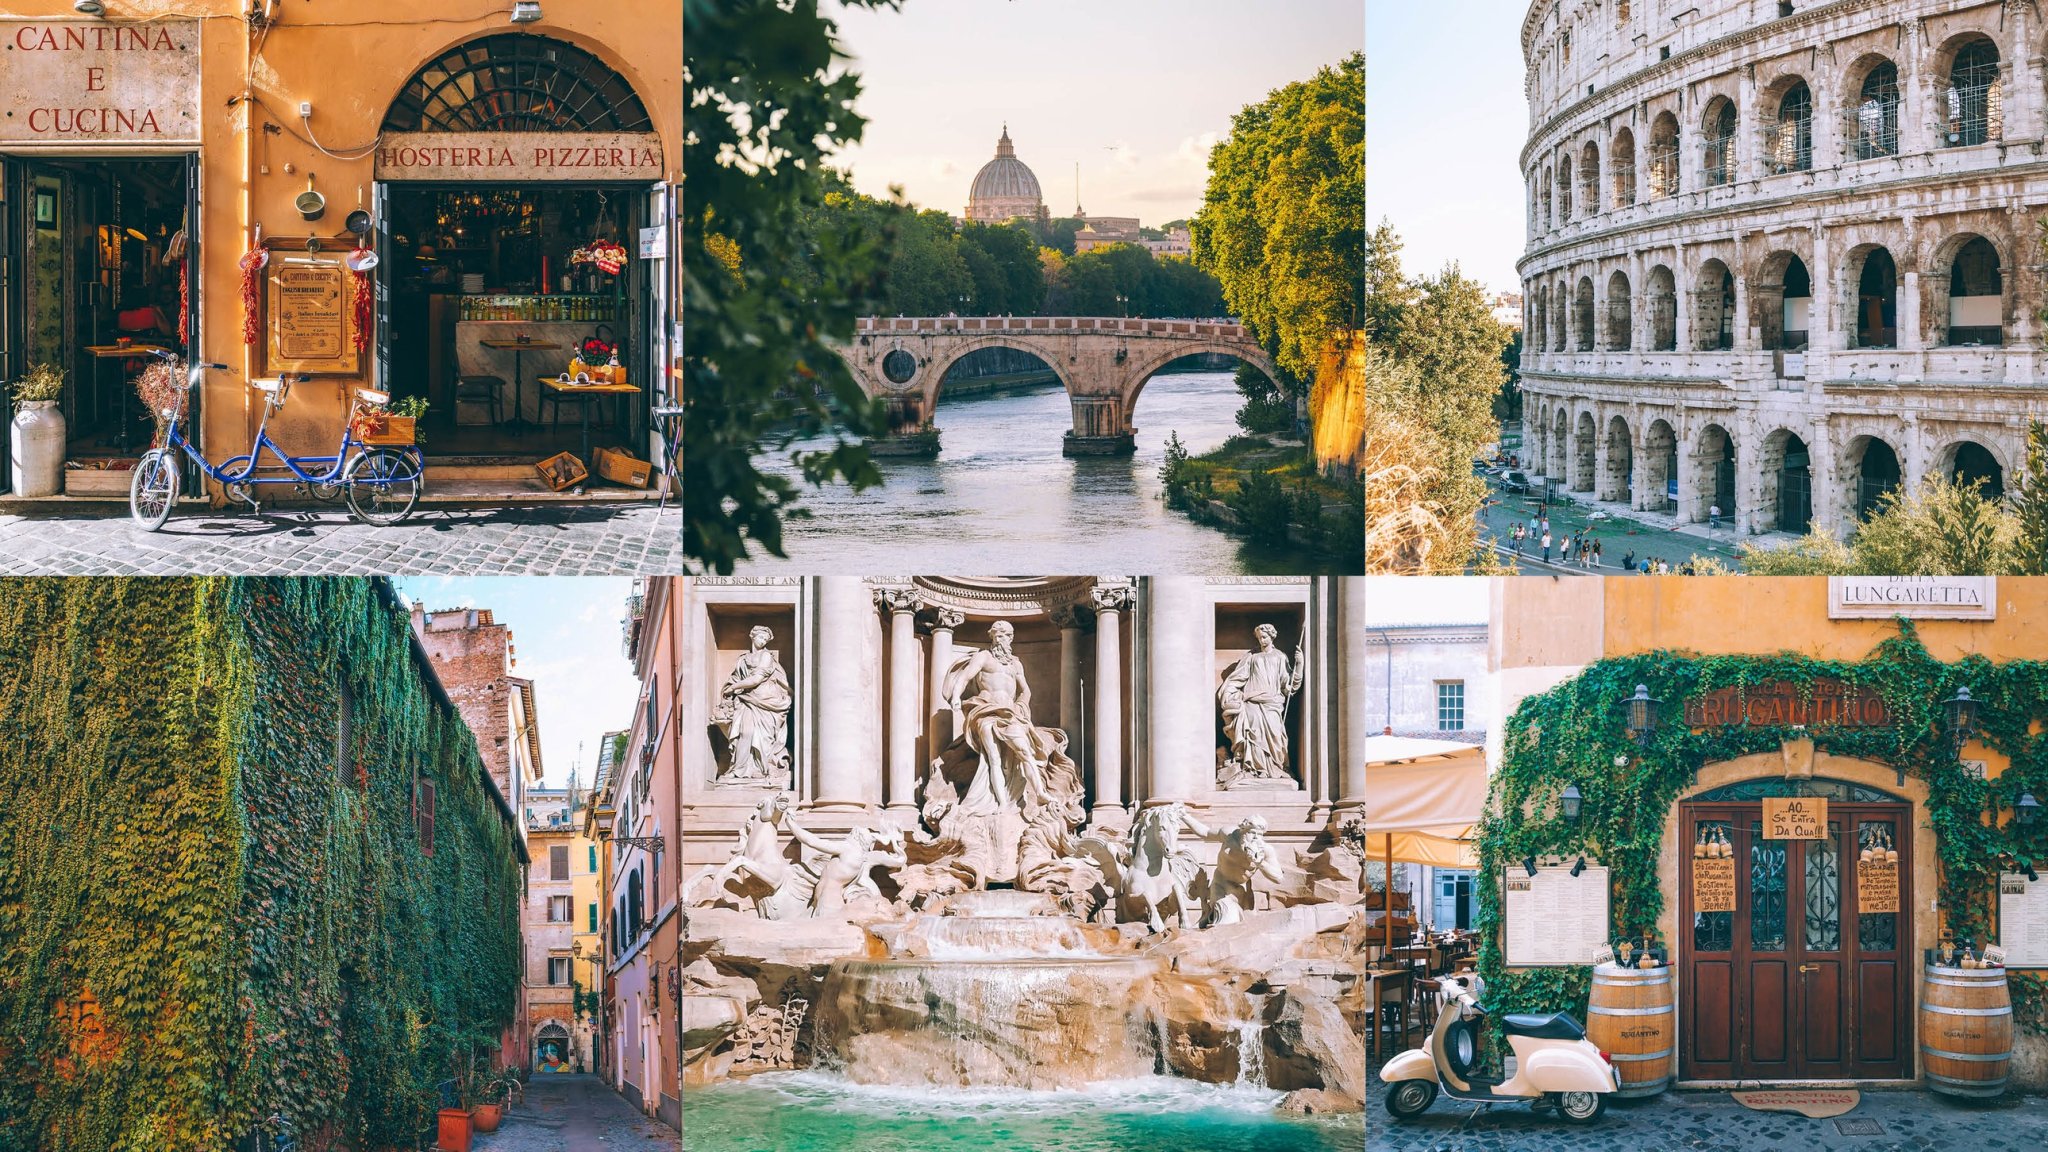 The most scenic spots in Rome